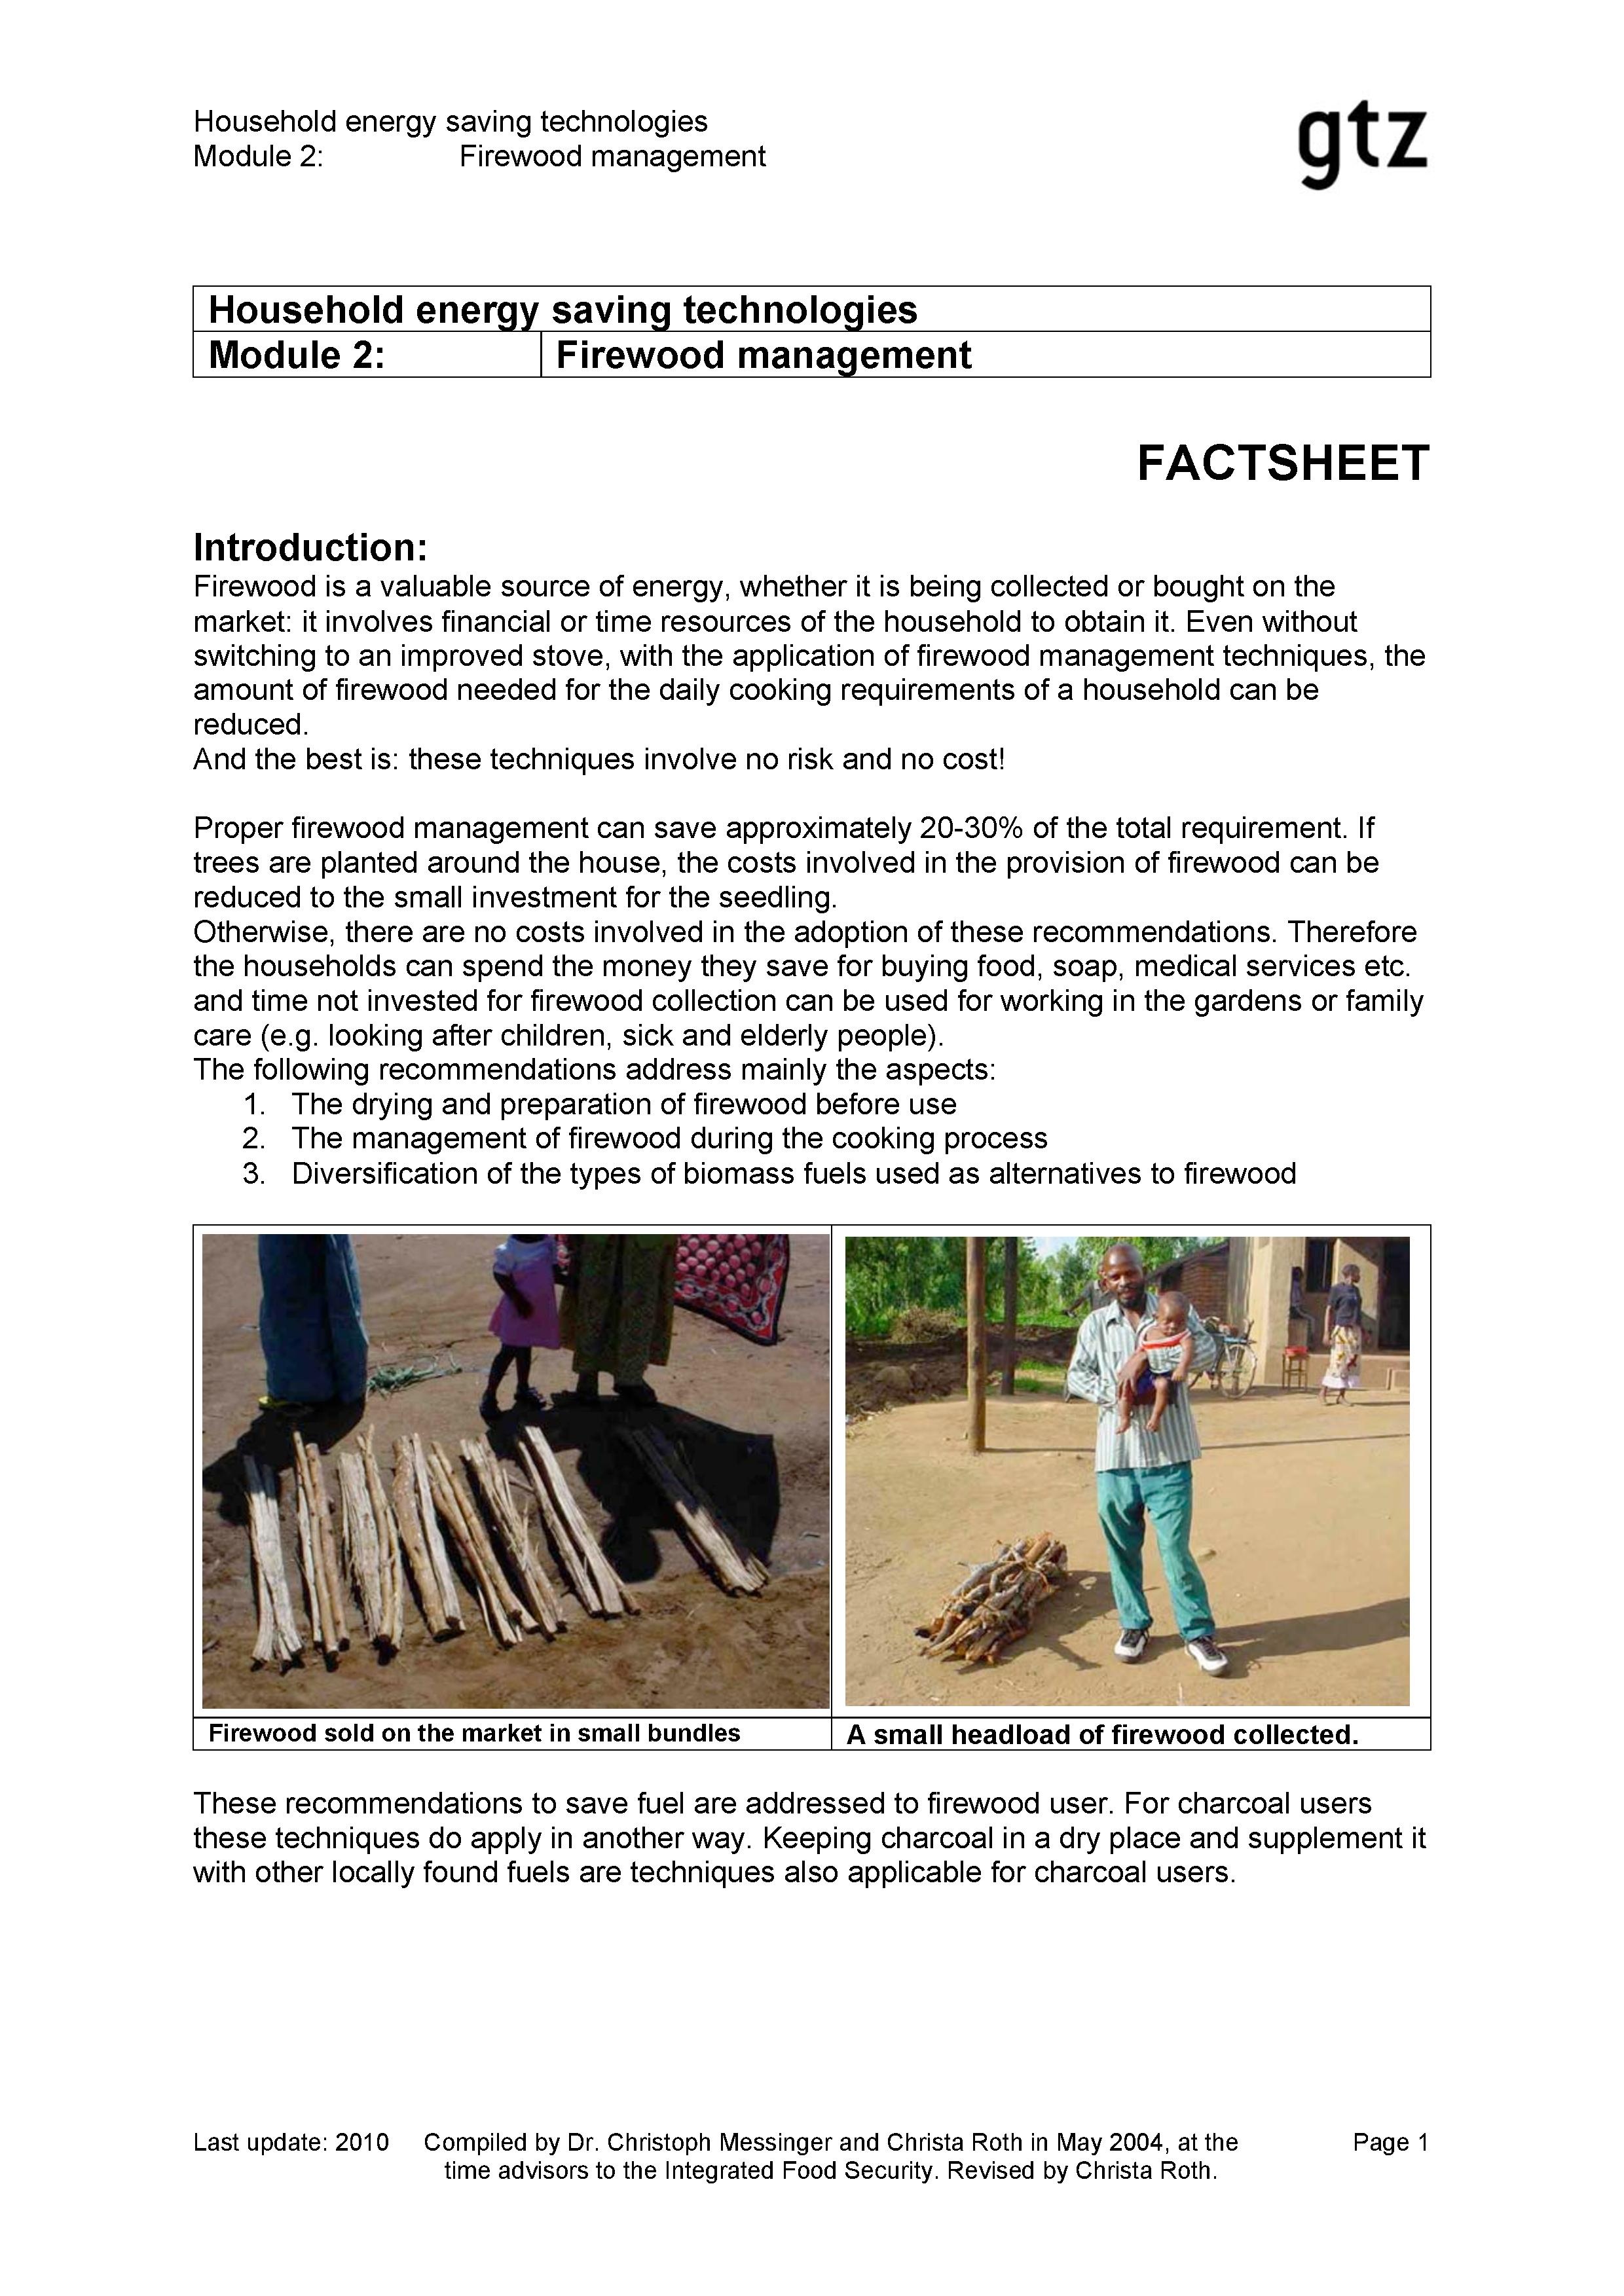 GTZ 2a FS firewood management 2010.pdf